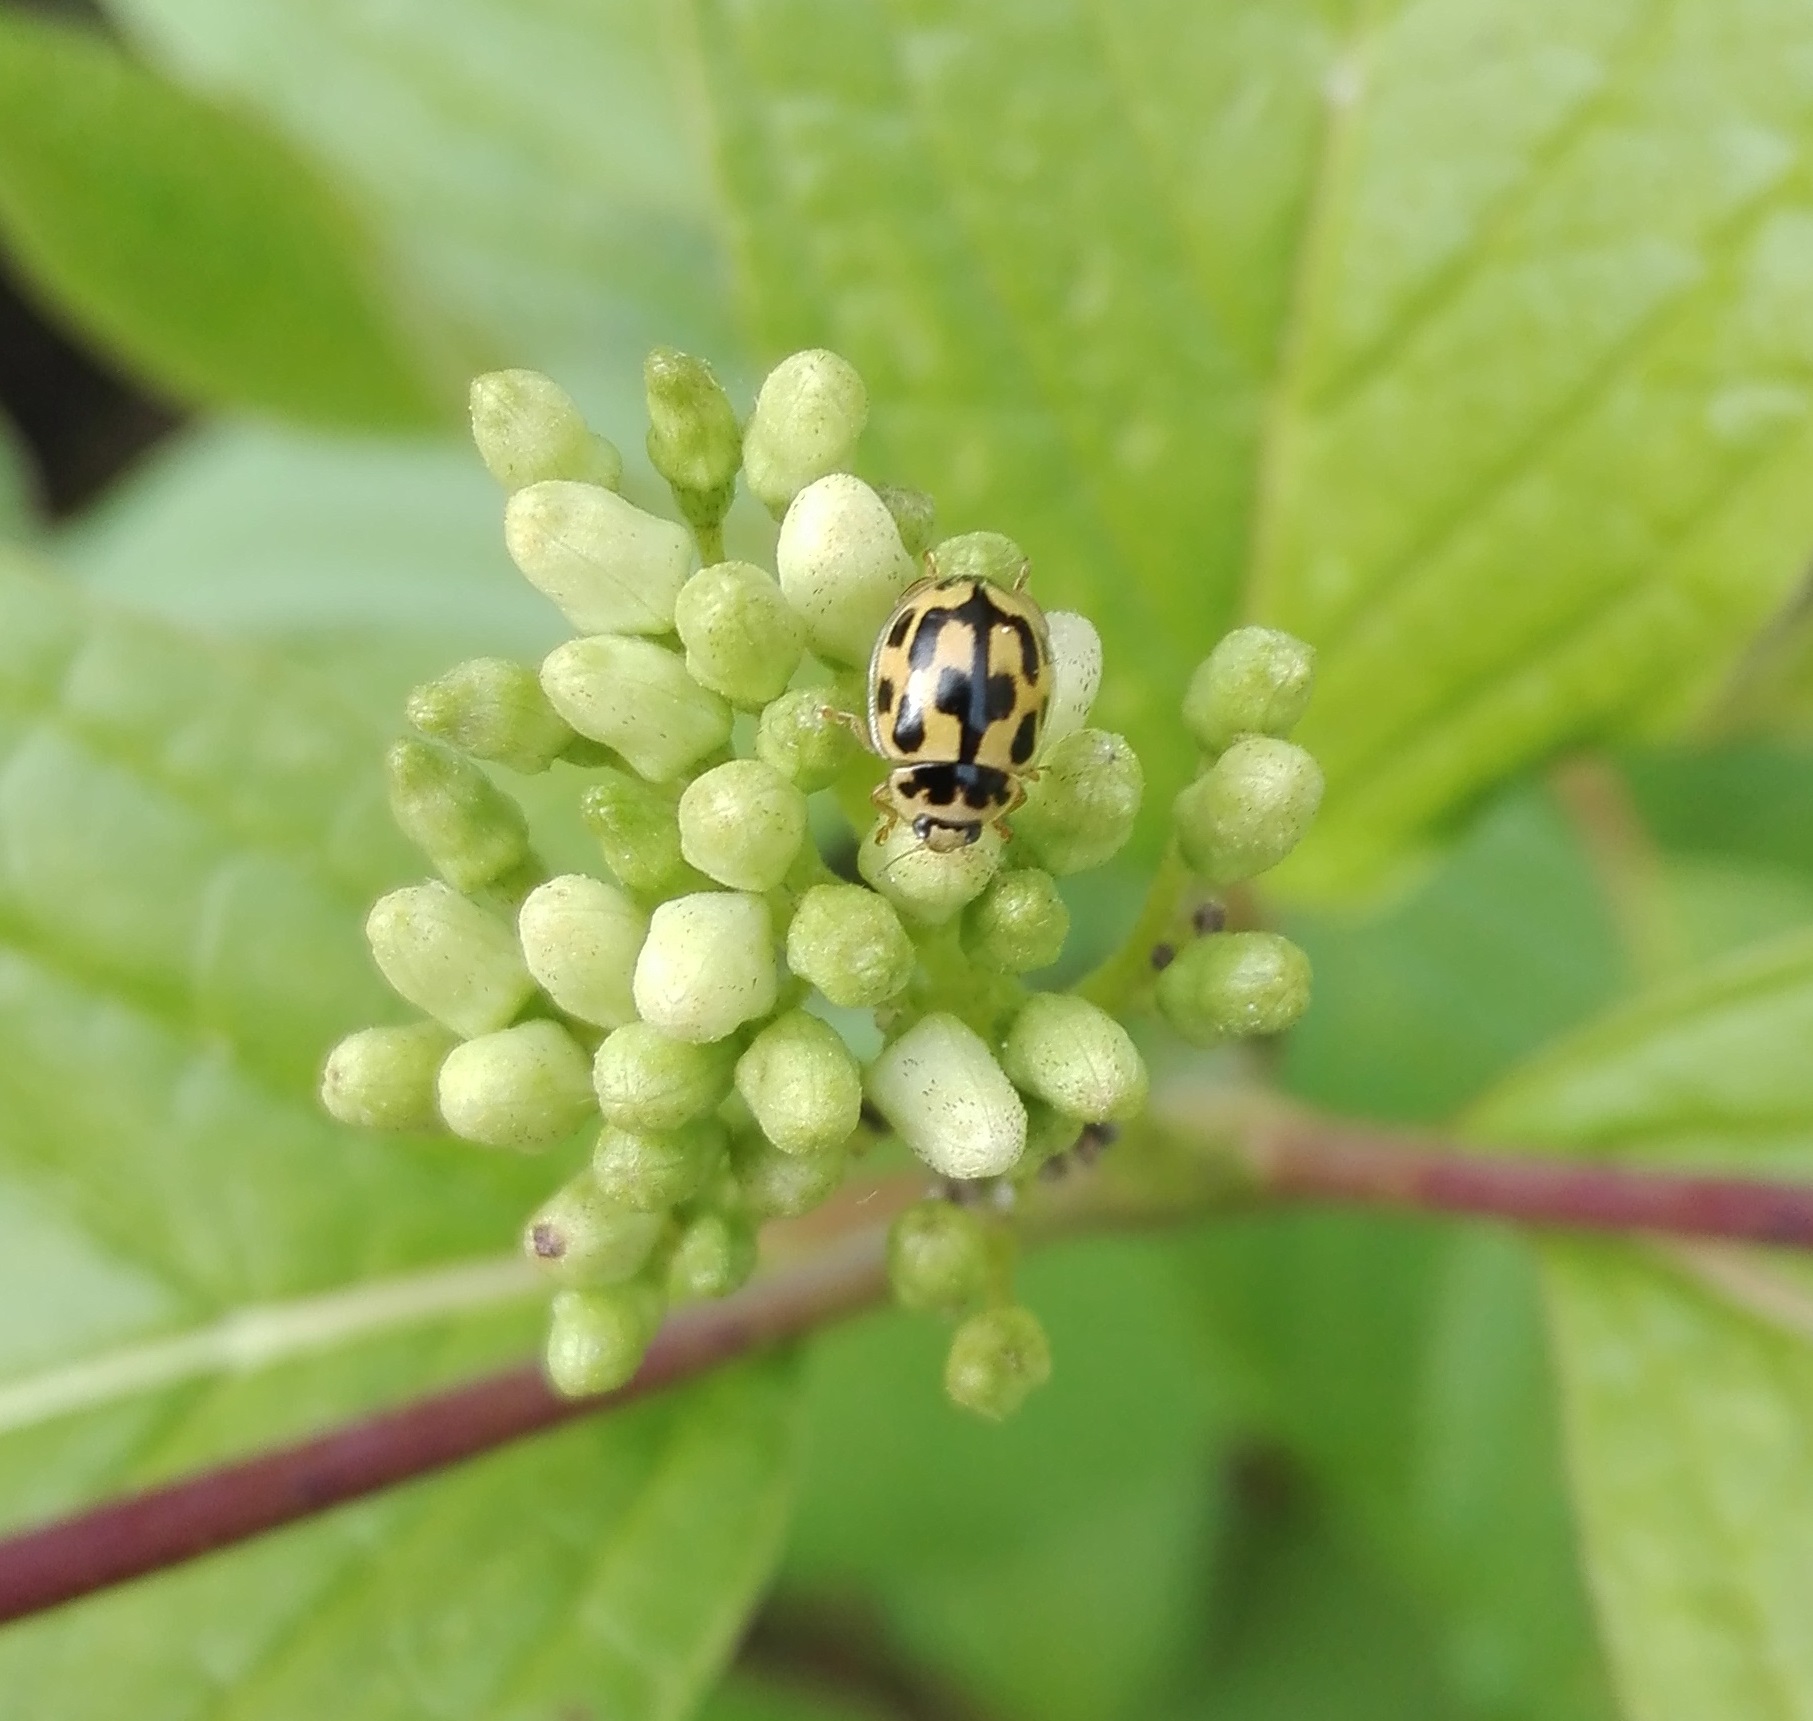 #254 14 Spot Ladybird (Propylea quattuordecimpunctata)